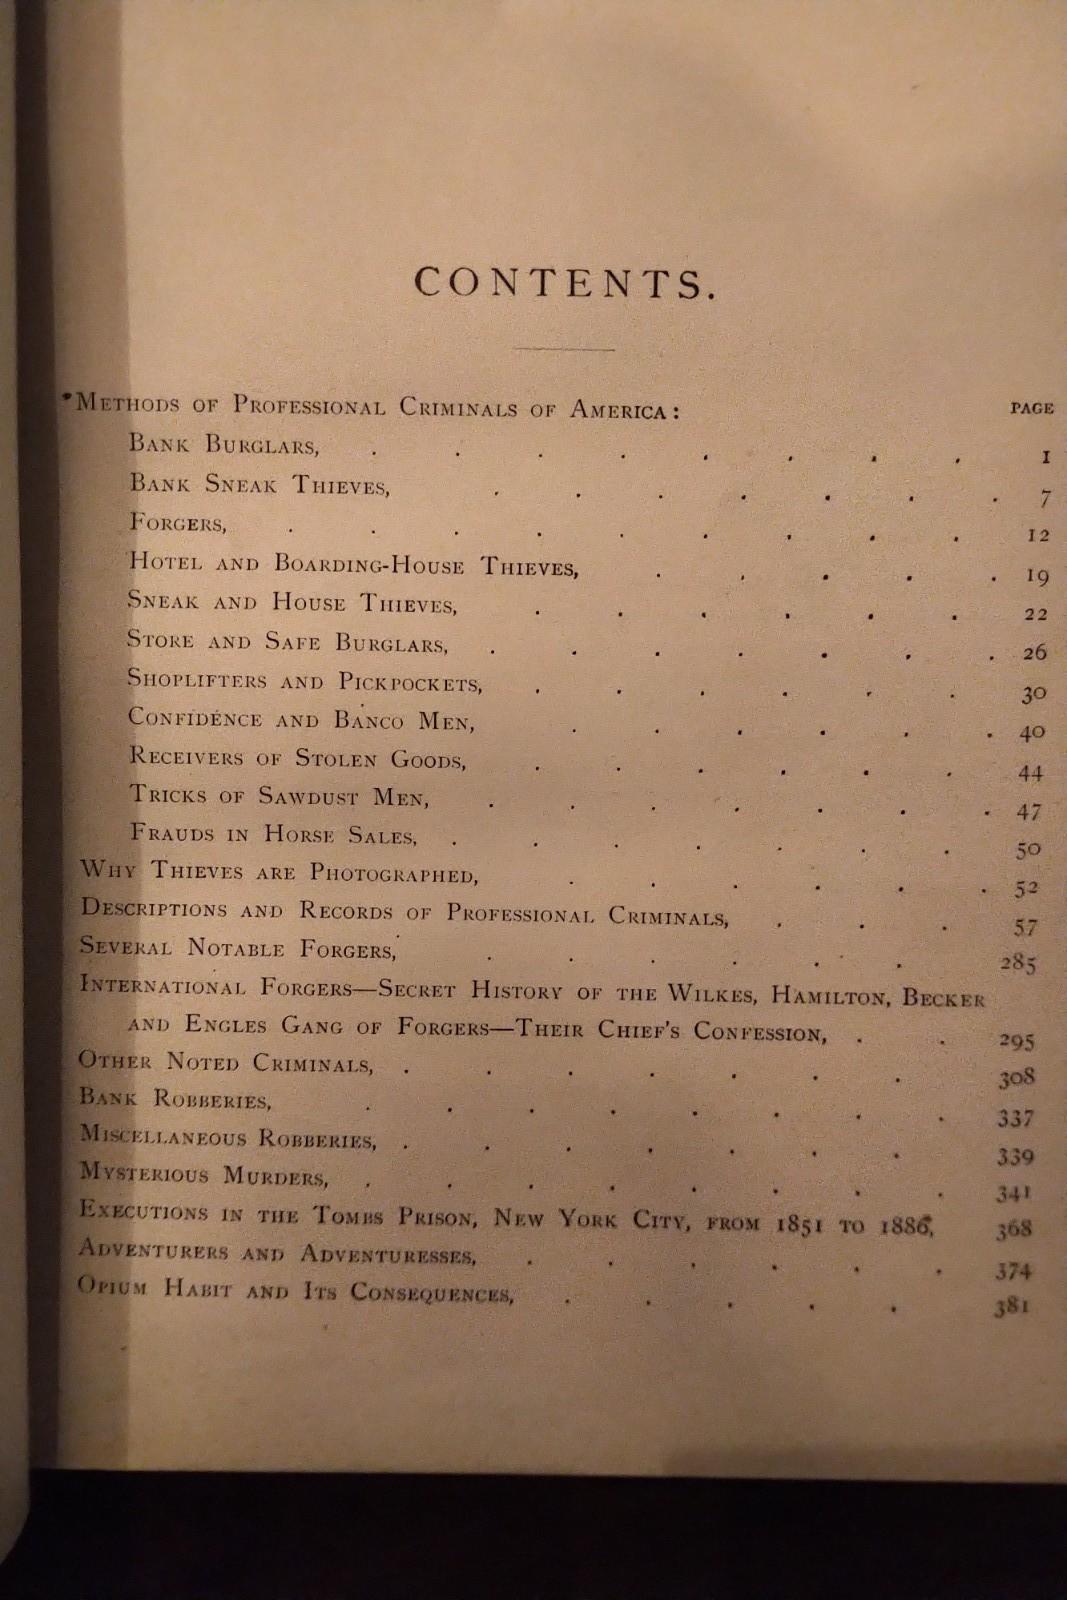 Professional Criminals of America - Thomas Byrnes - 1886 - VERY RARE 10